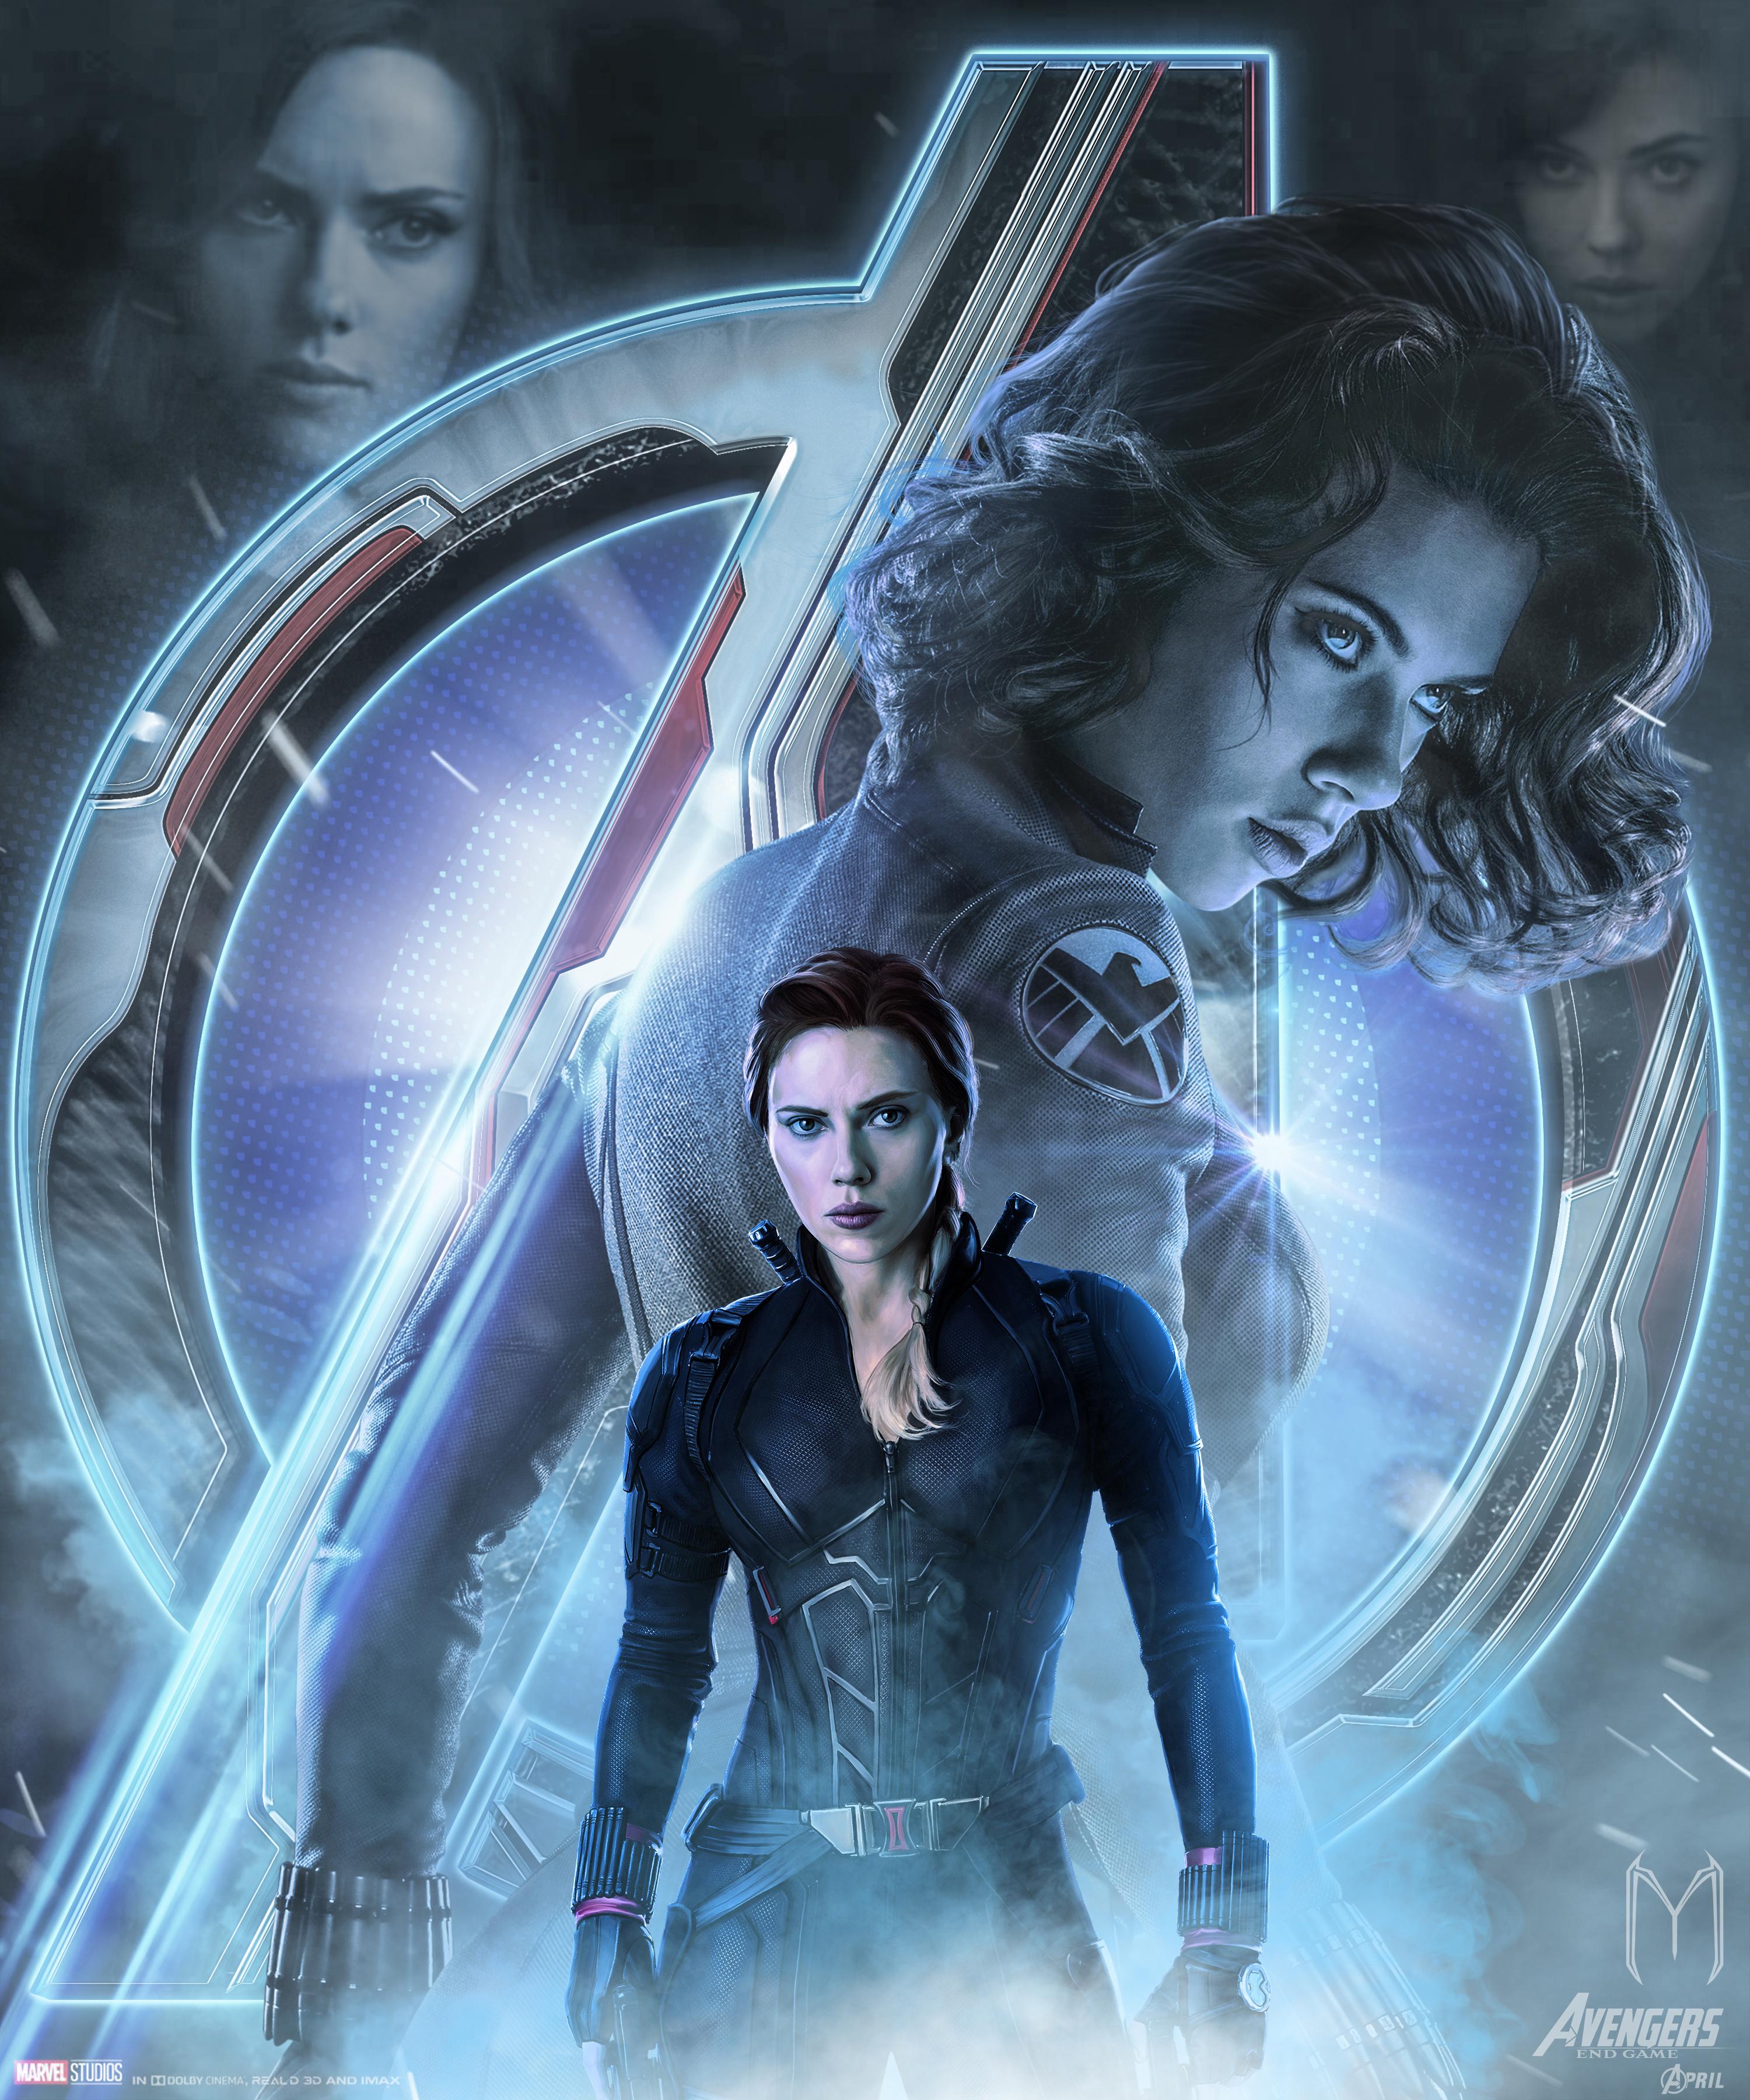 Natasha Romanoff / Black Widow Avengers Endgame character